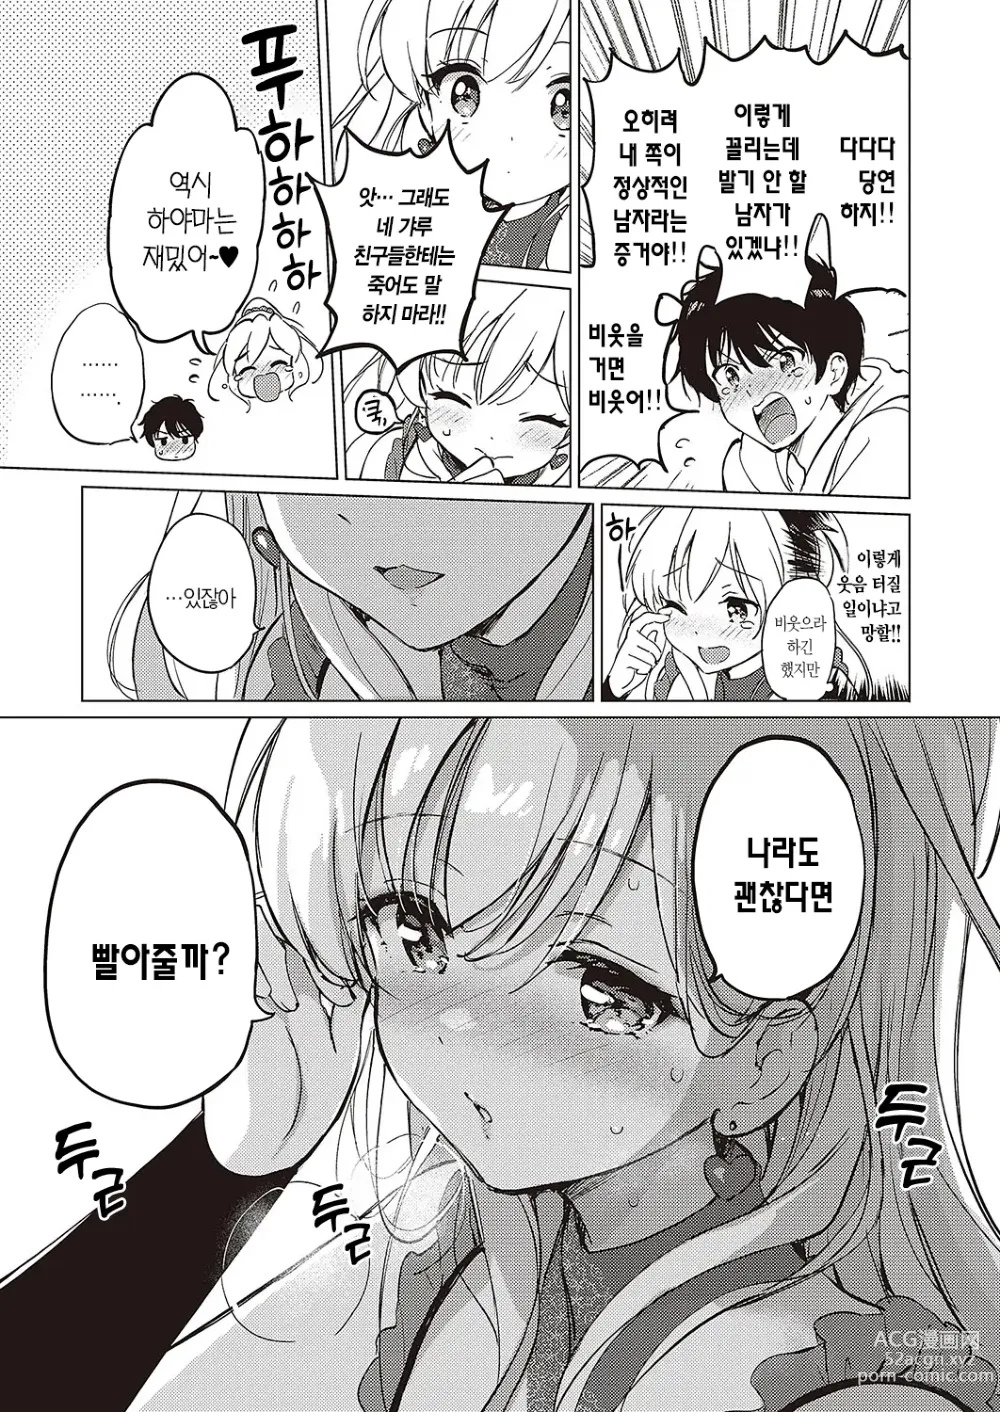 Page 12 of manga 귀여워서 어쩔 수가 없어!